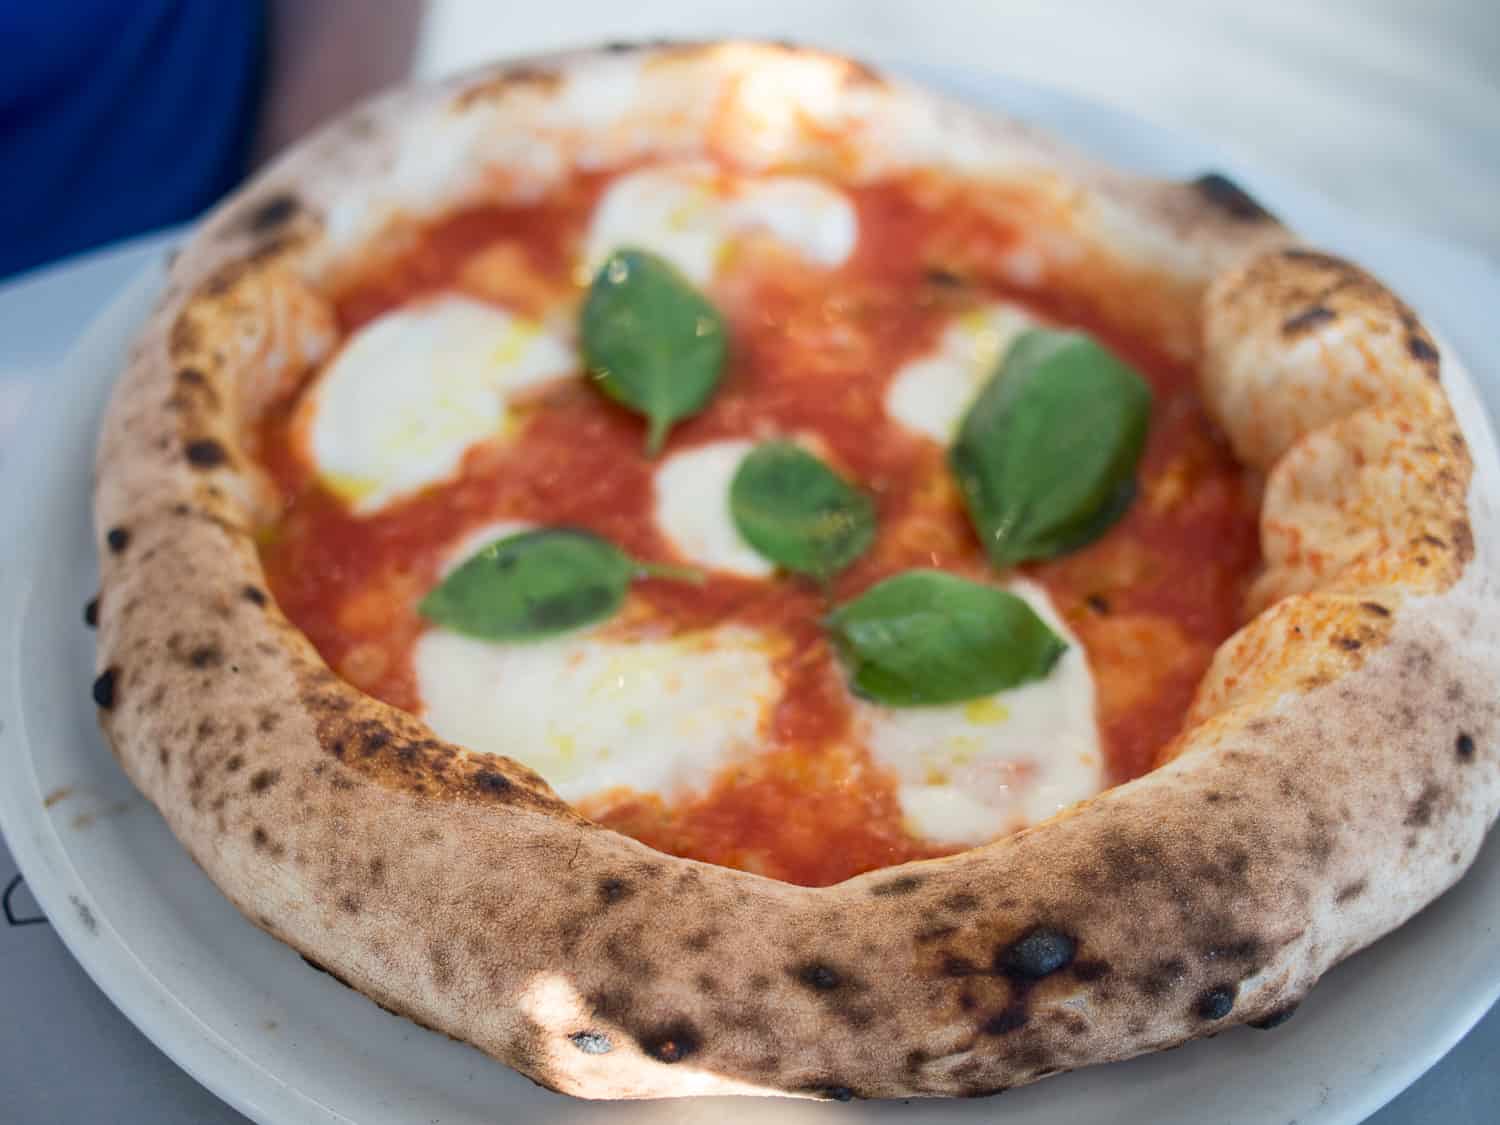 Neapolitan style pizza at Seu Pizza Illuminati in Trastevere, Rome